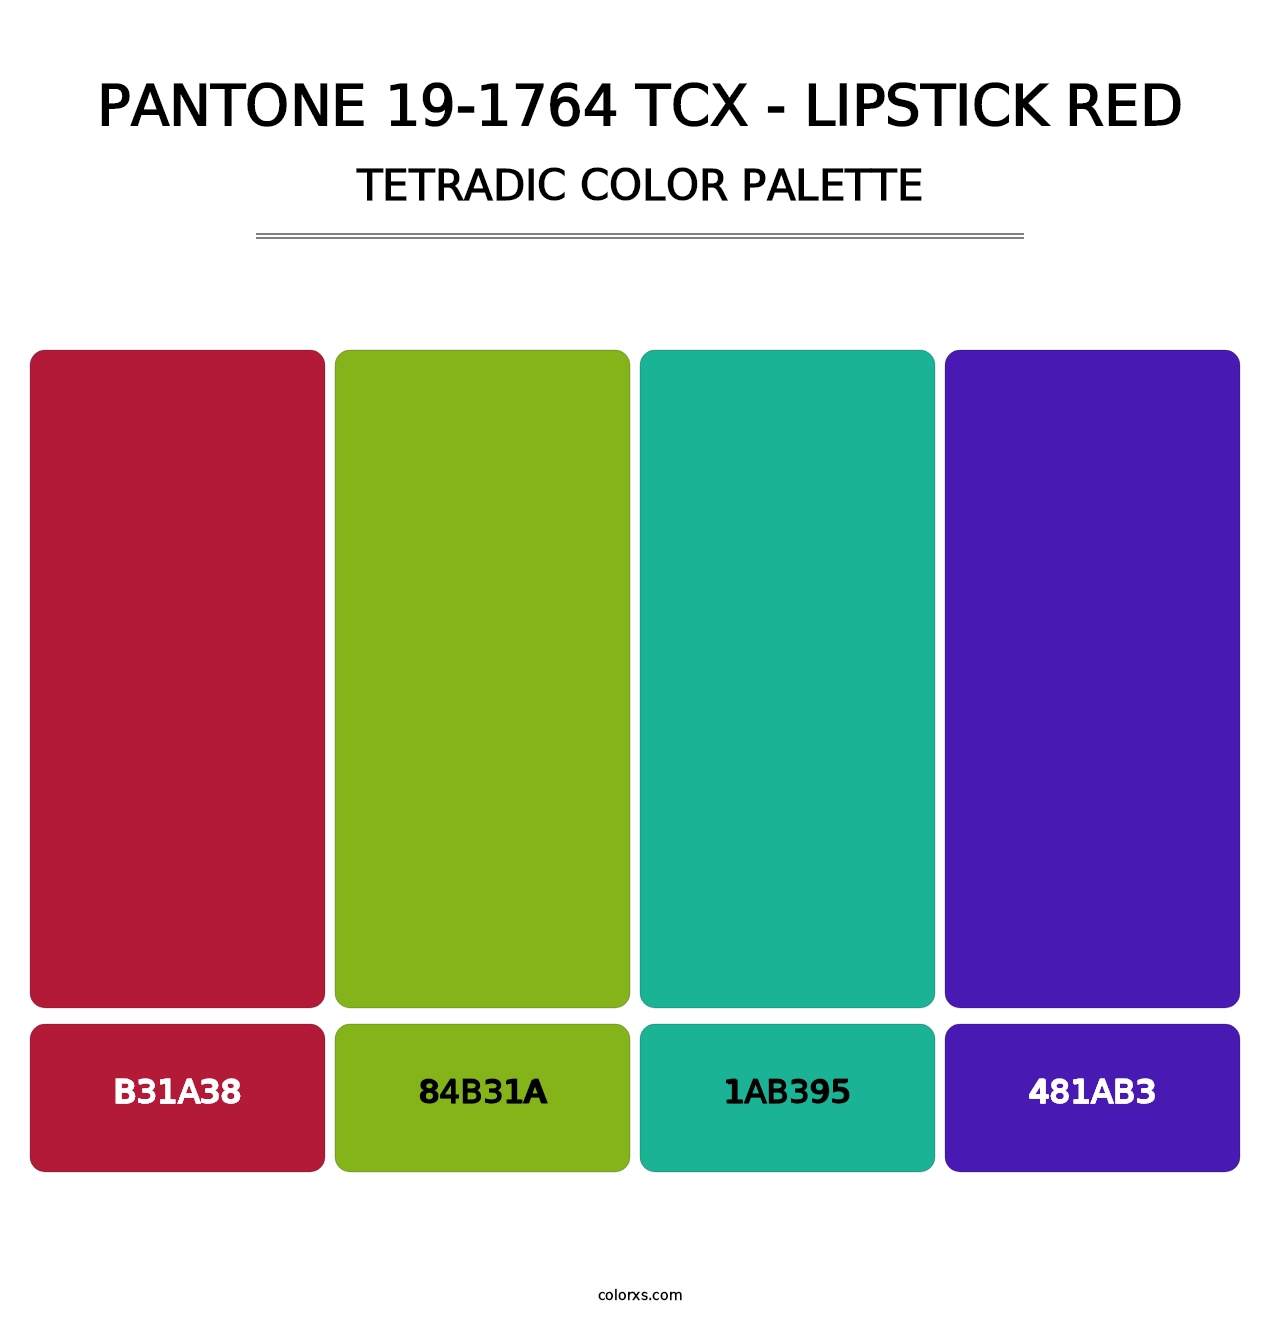 PANTONE 19-1764 TCX - Lipstick Red - Tetradic Color Palette